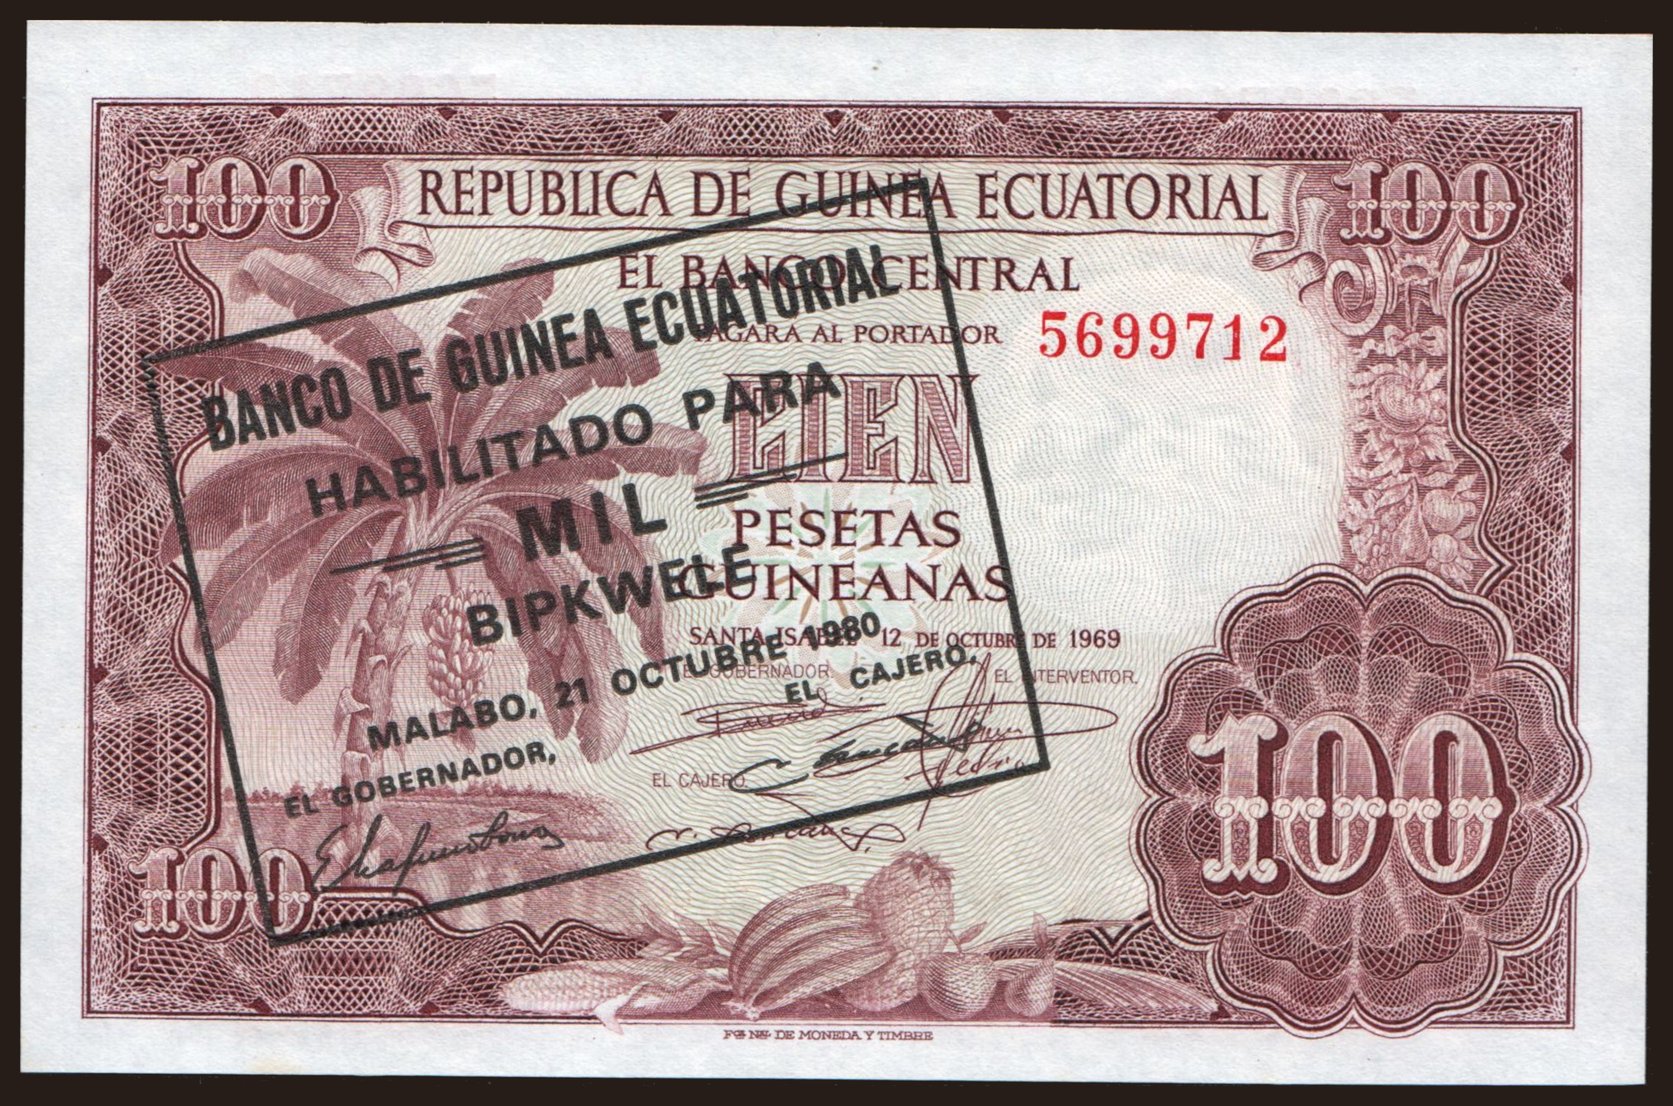 100 pesetas/ 1000 bipkwele, 1969(80)